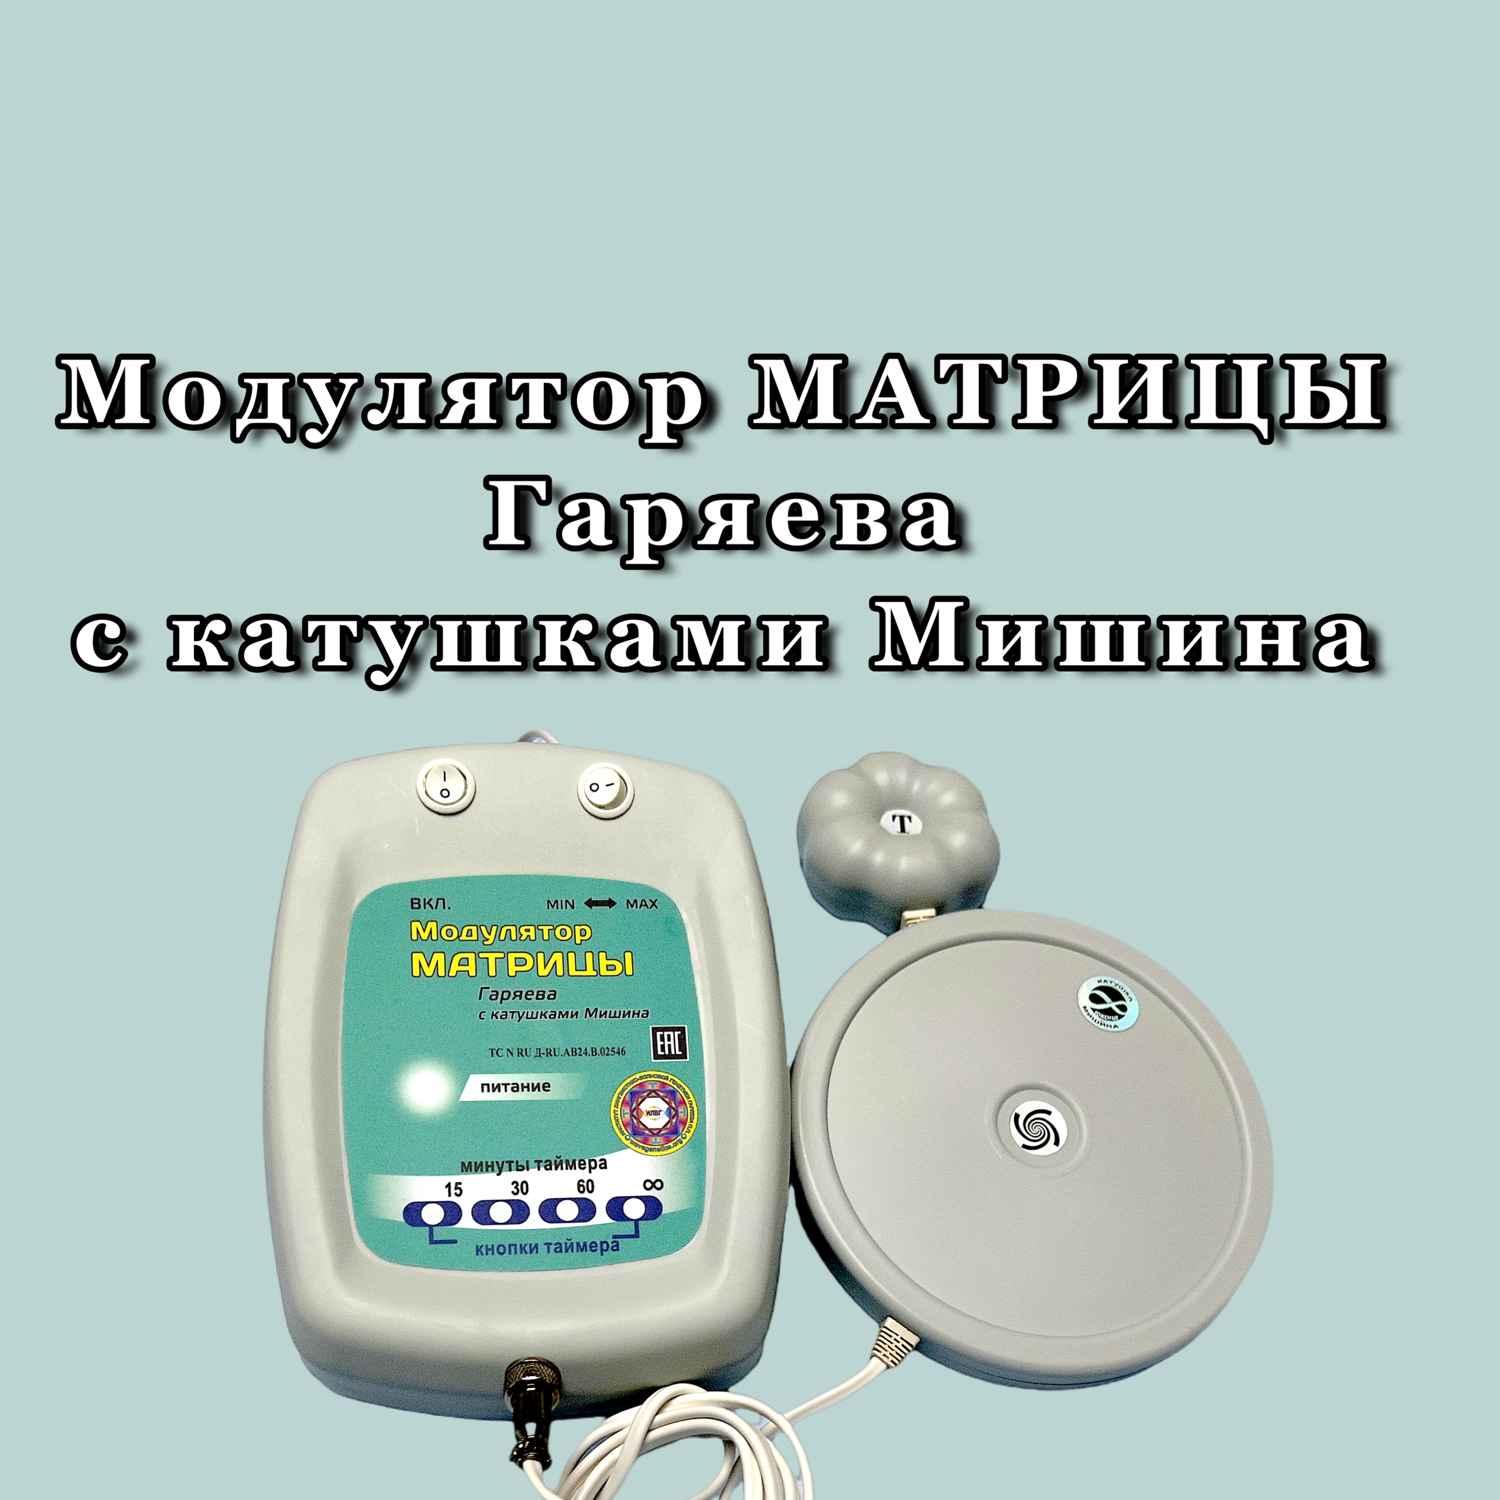 Модулятор матрицы Гаряева с катушками Мишина